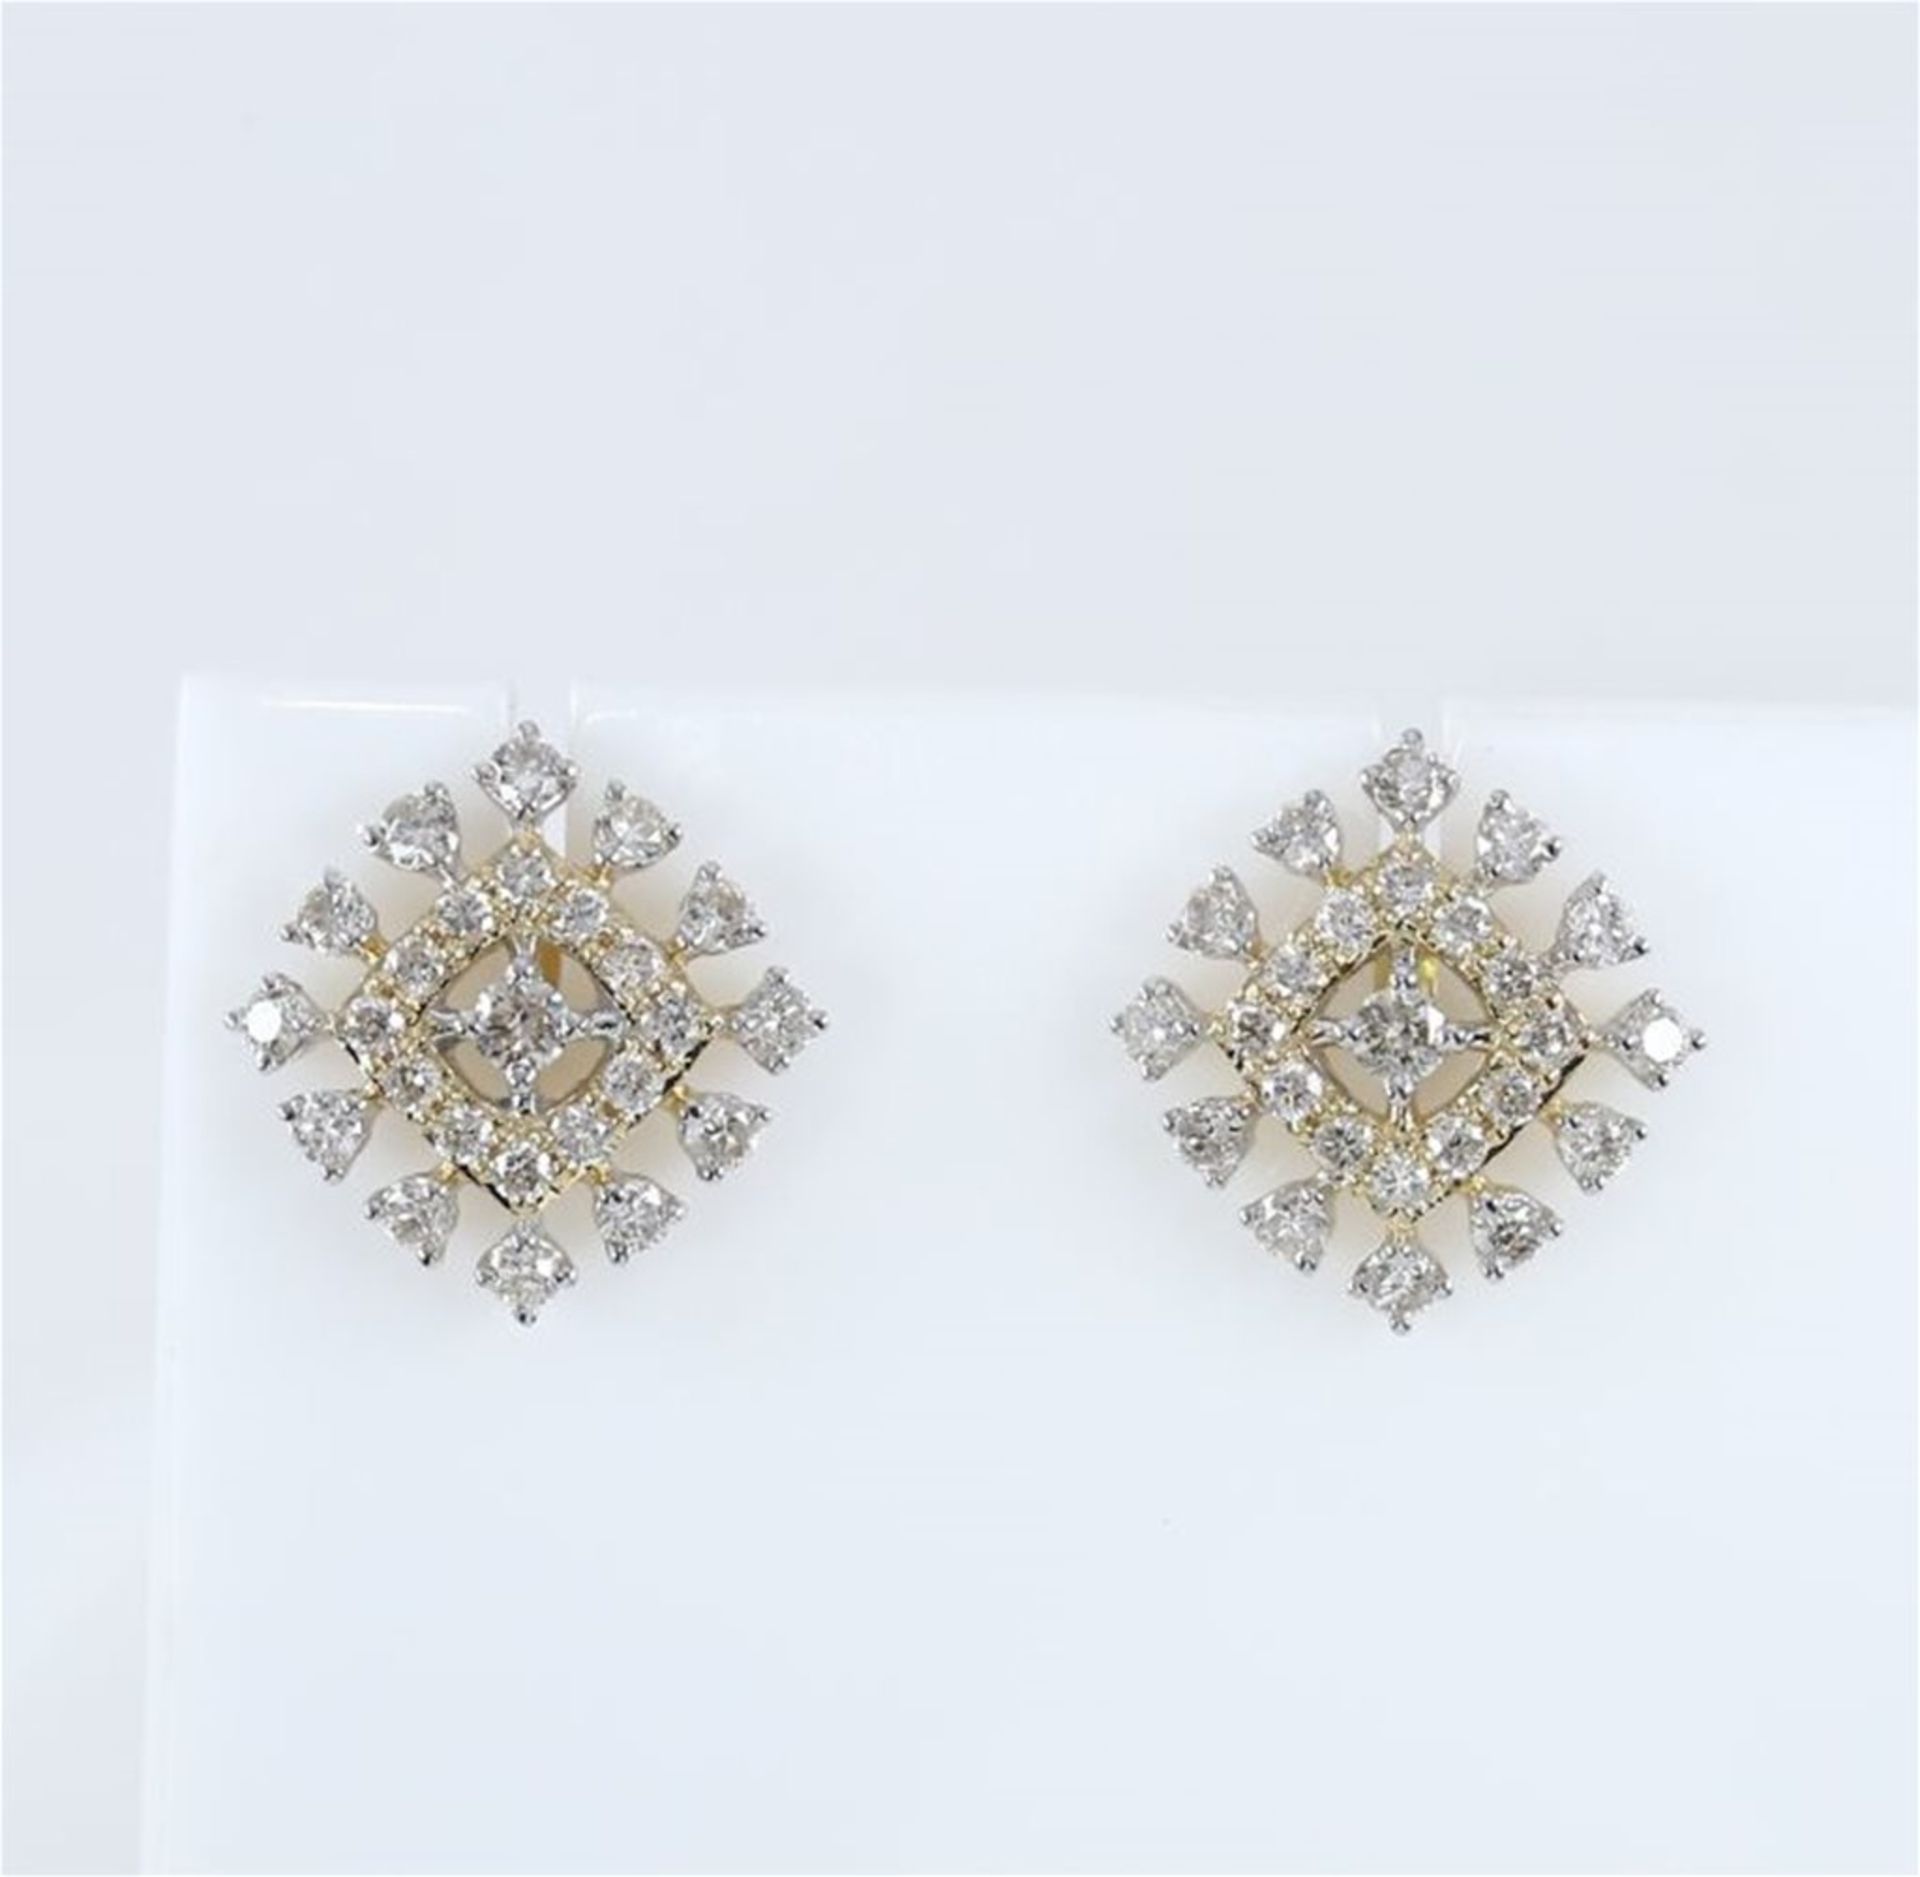 IGI Certified 18 K Yellow Gold Diamond Earrings - Image 4 of 7